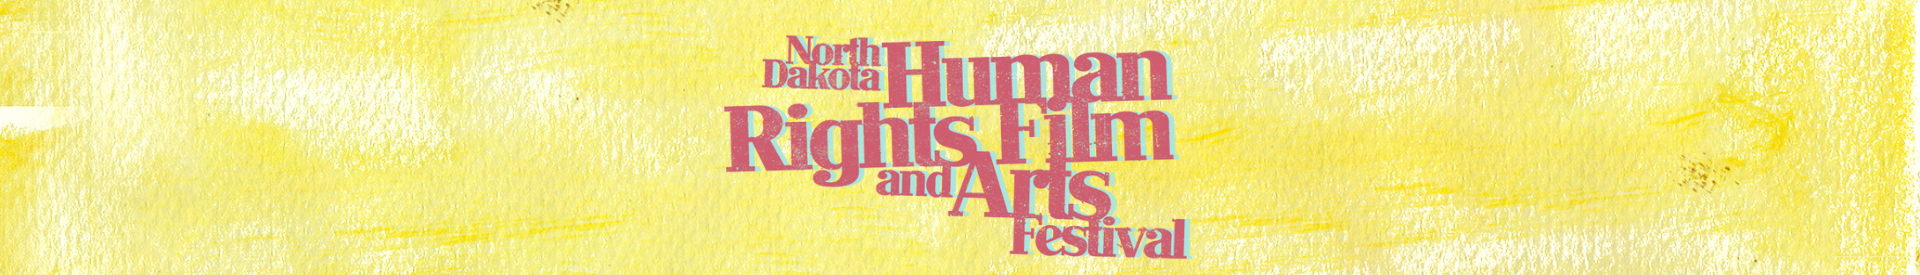 North Dakota Human Rights Film and Arts Festival